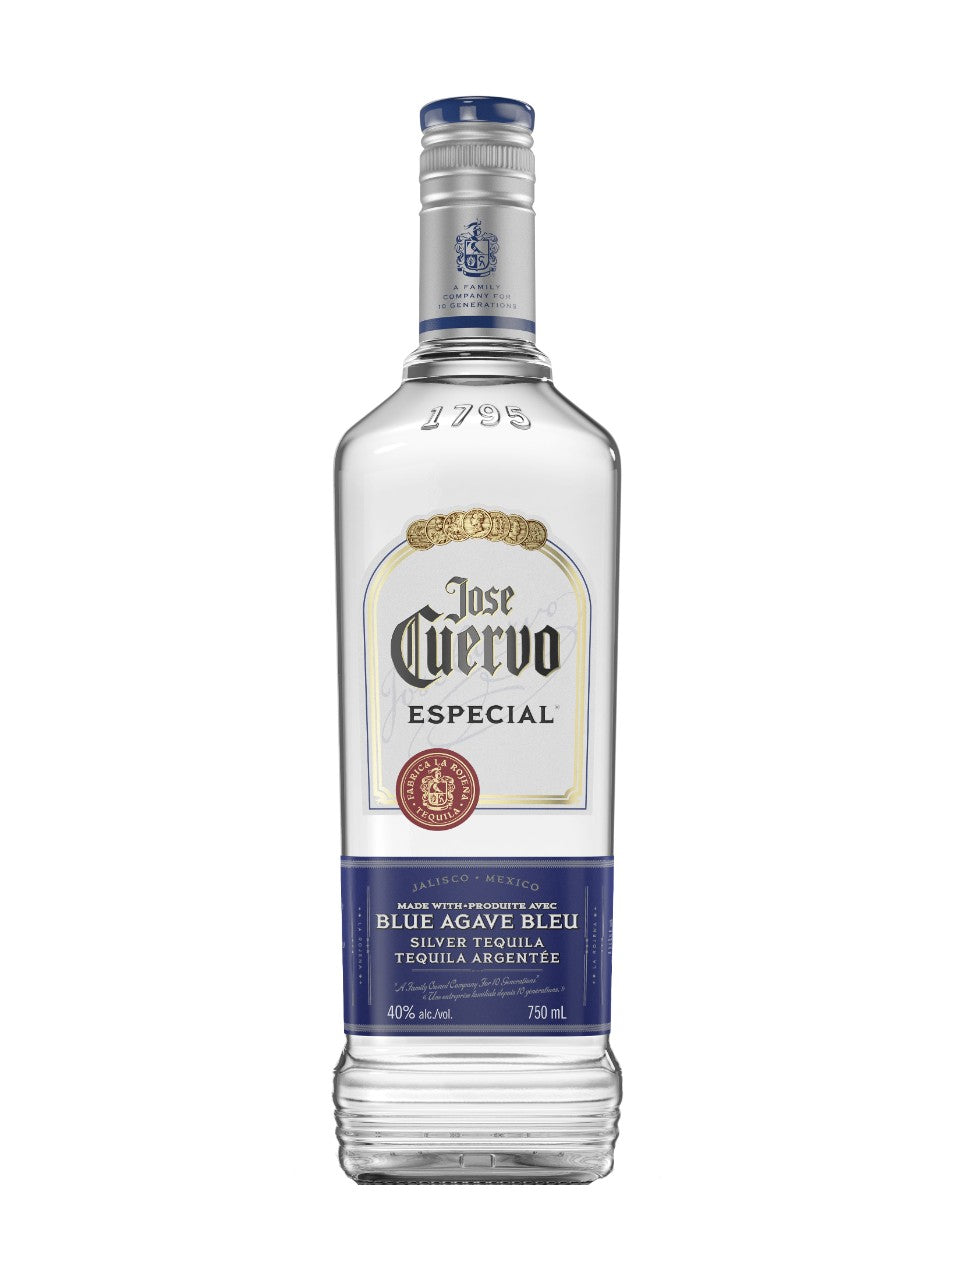 Jose Cuervo Especial Silver Tequila 750 mL bottle